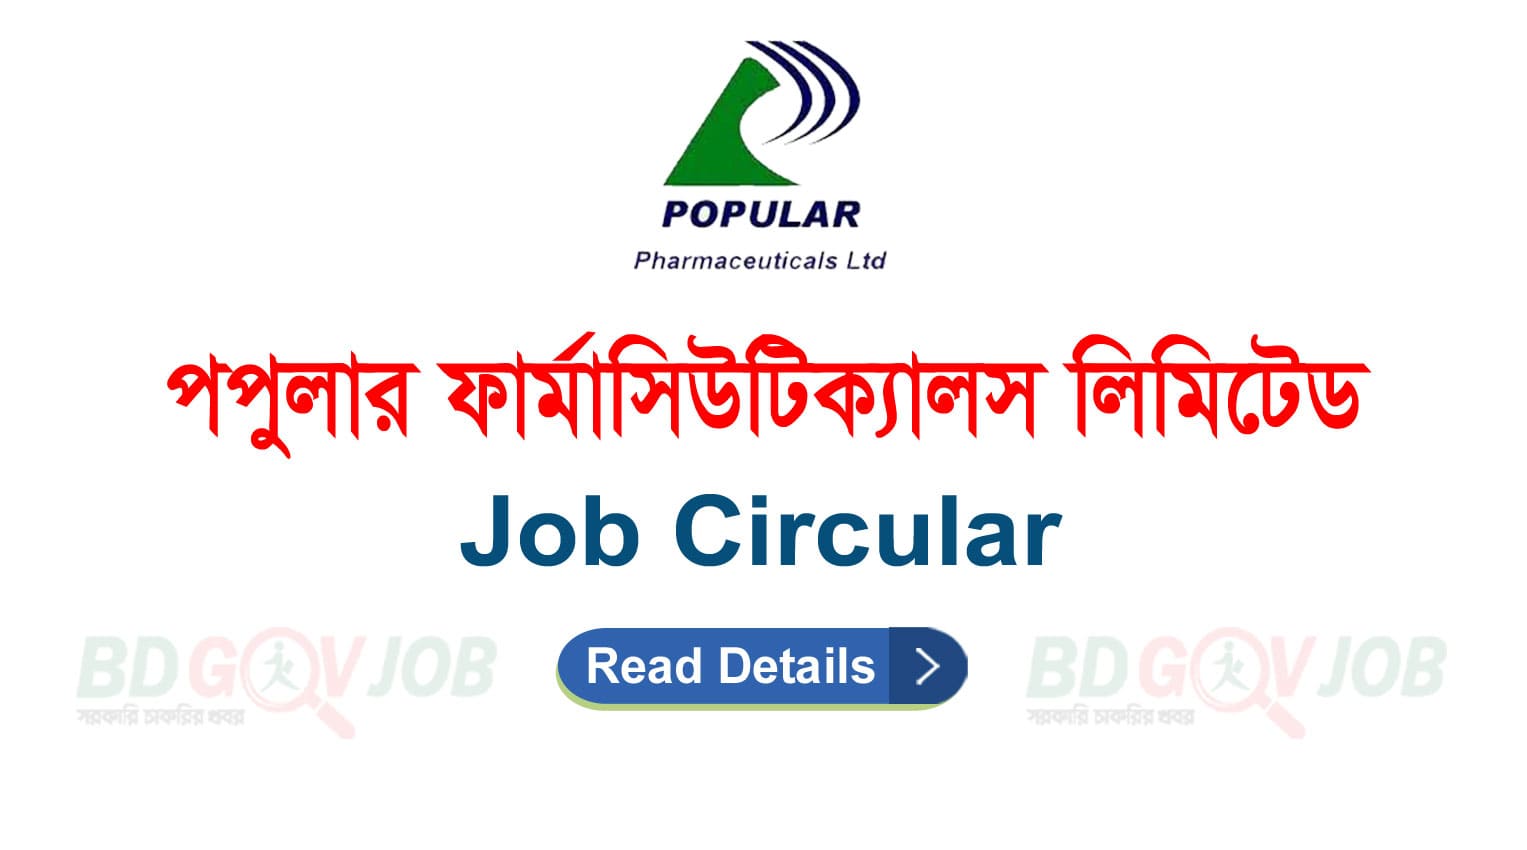 Popular Pharmaceuticals Ltd Job Circular